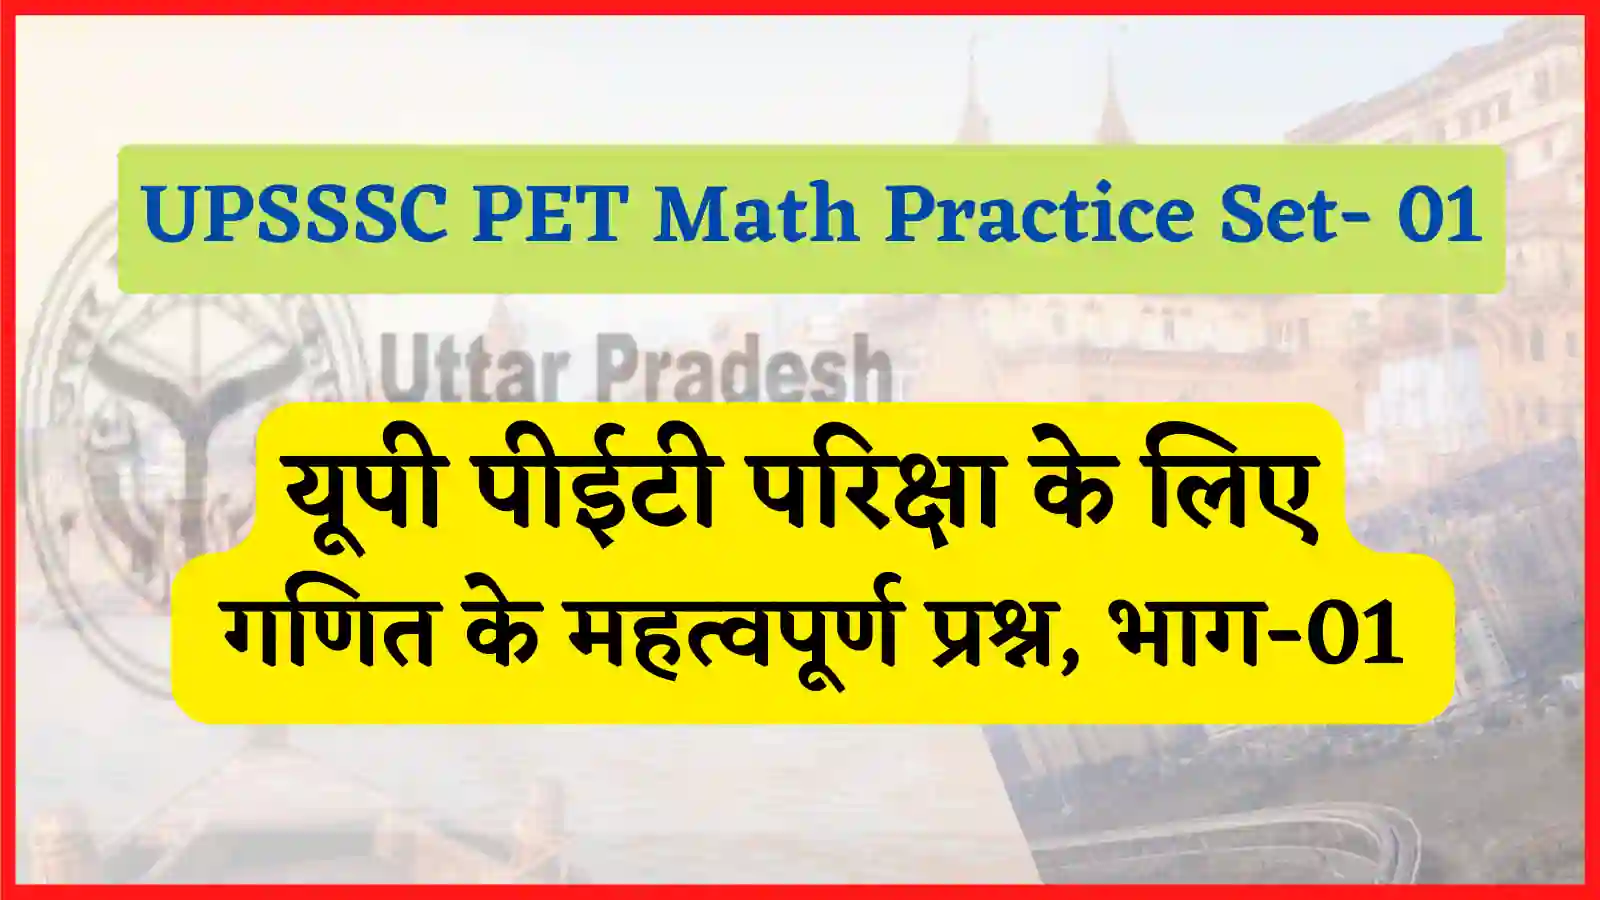 UPSSSC PET Math Practice set- 01